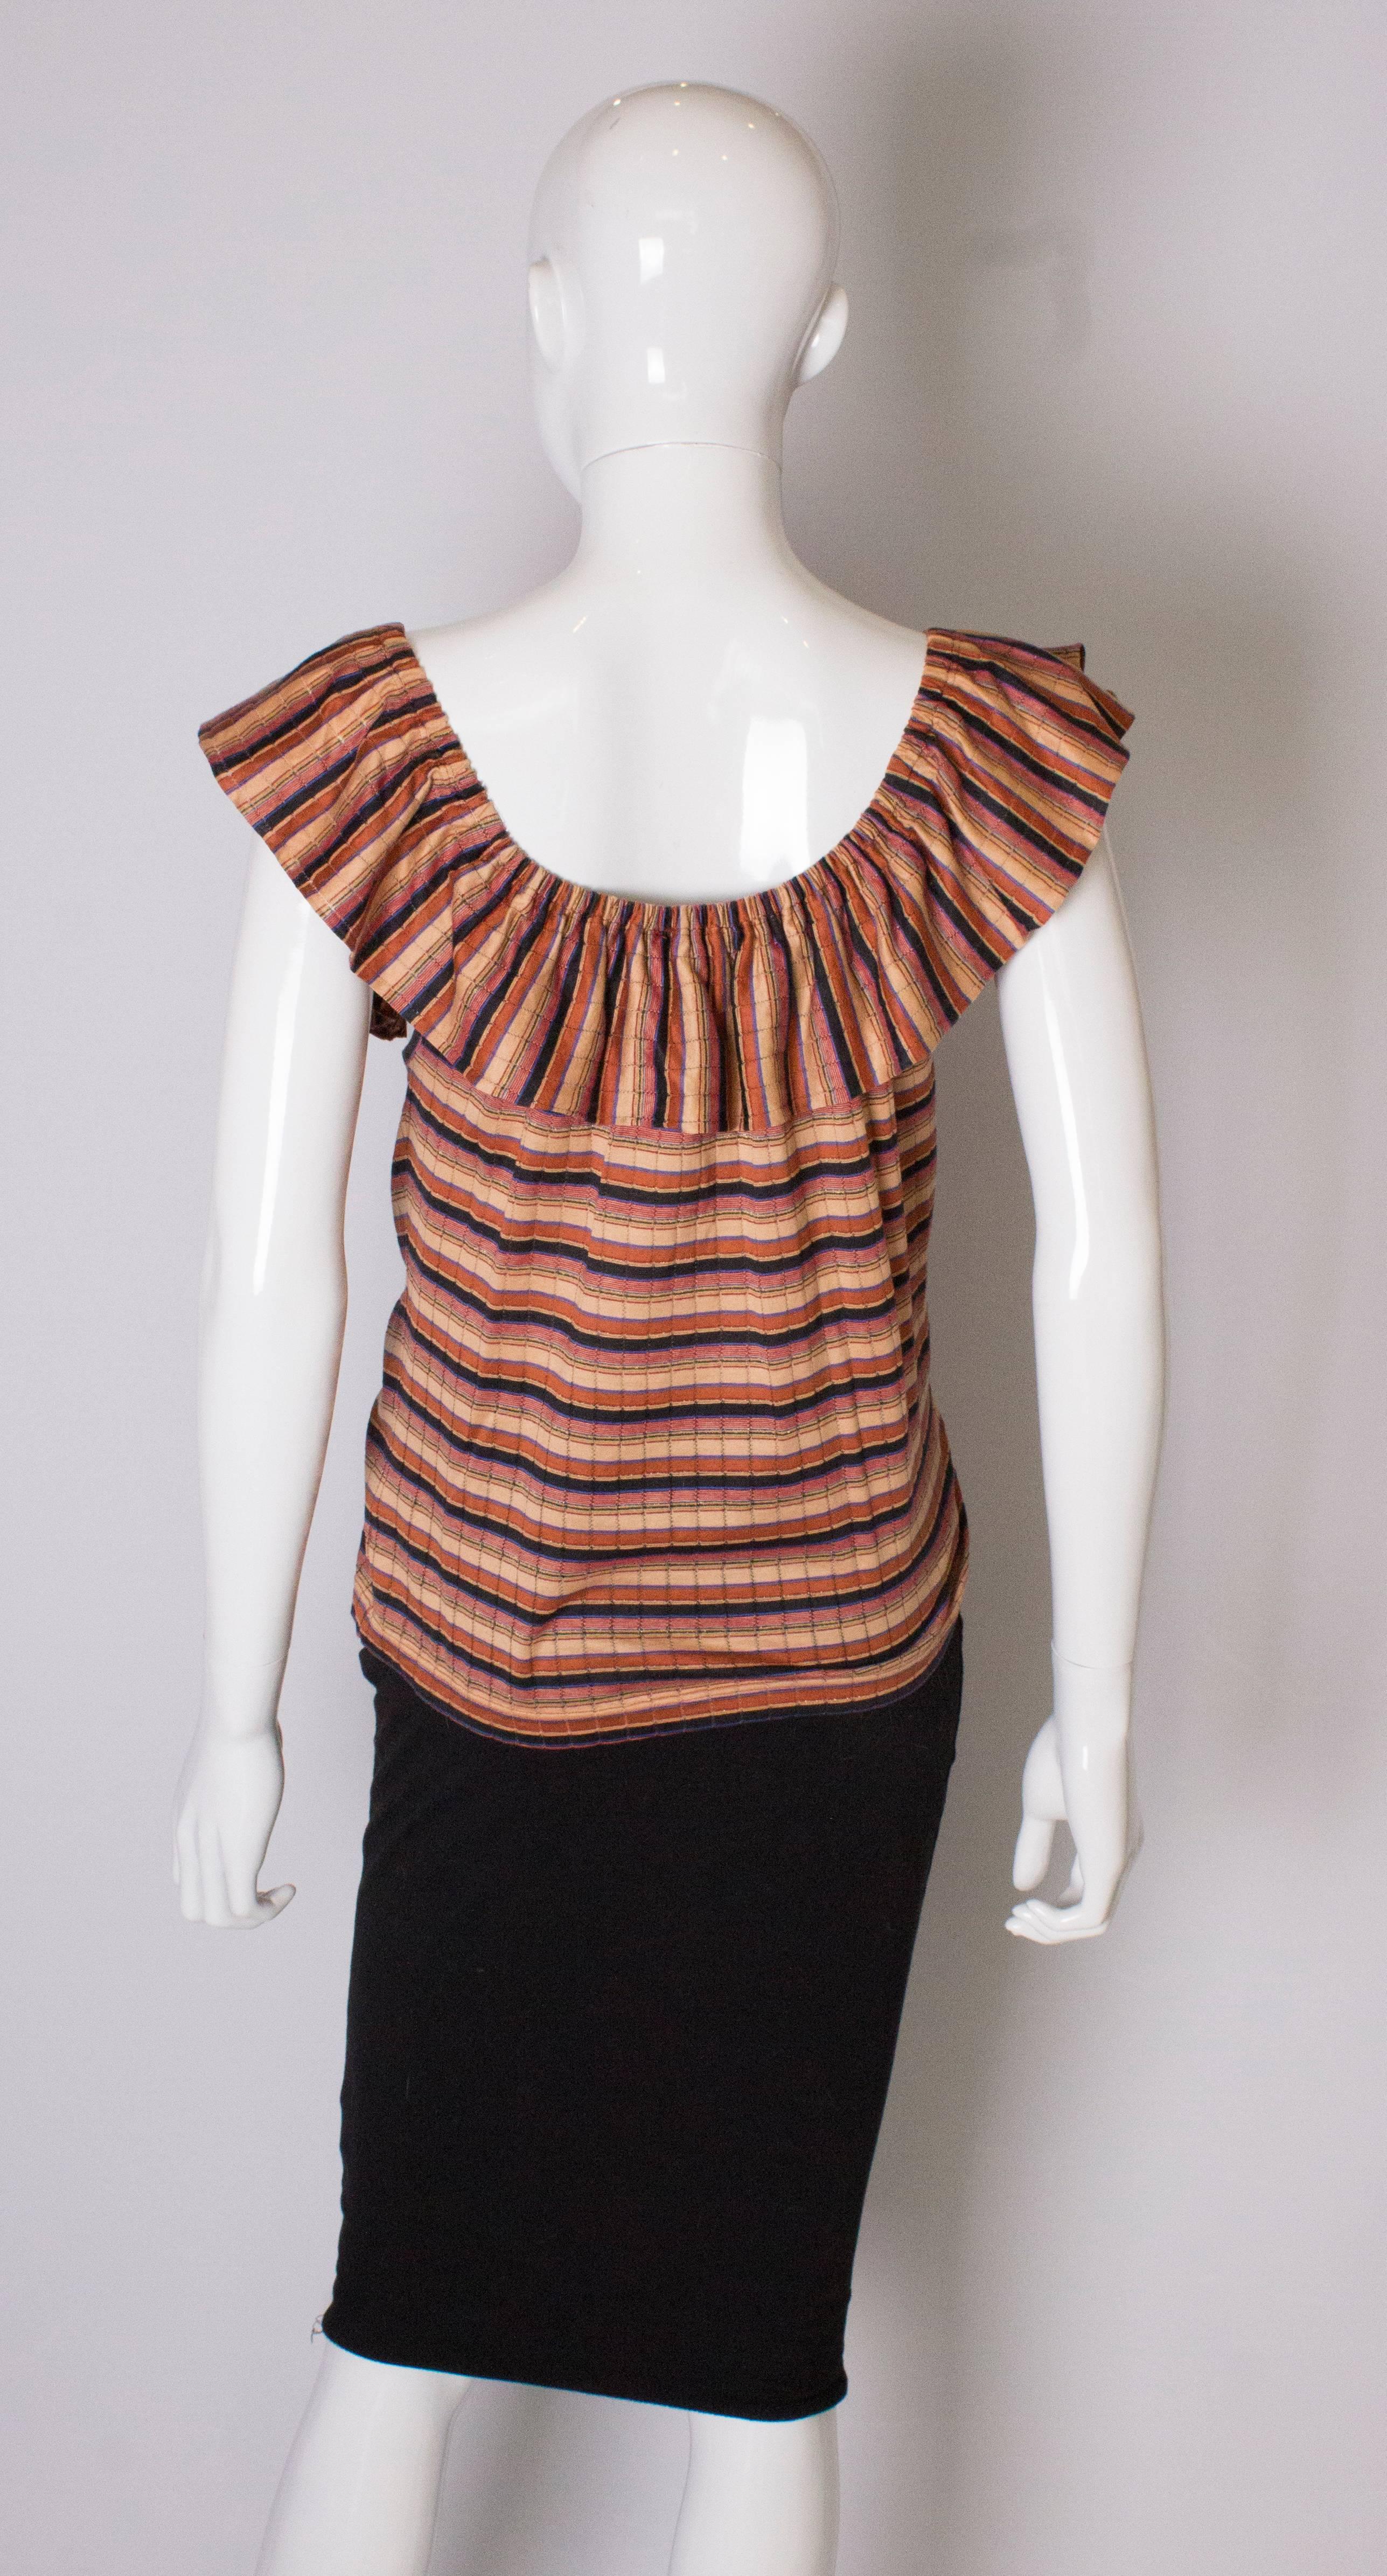  A Vintage 1970s striped off shoulder summer top by Yves Saint Laurent  2